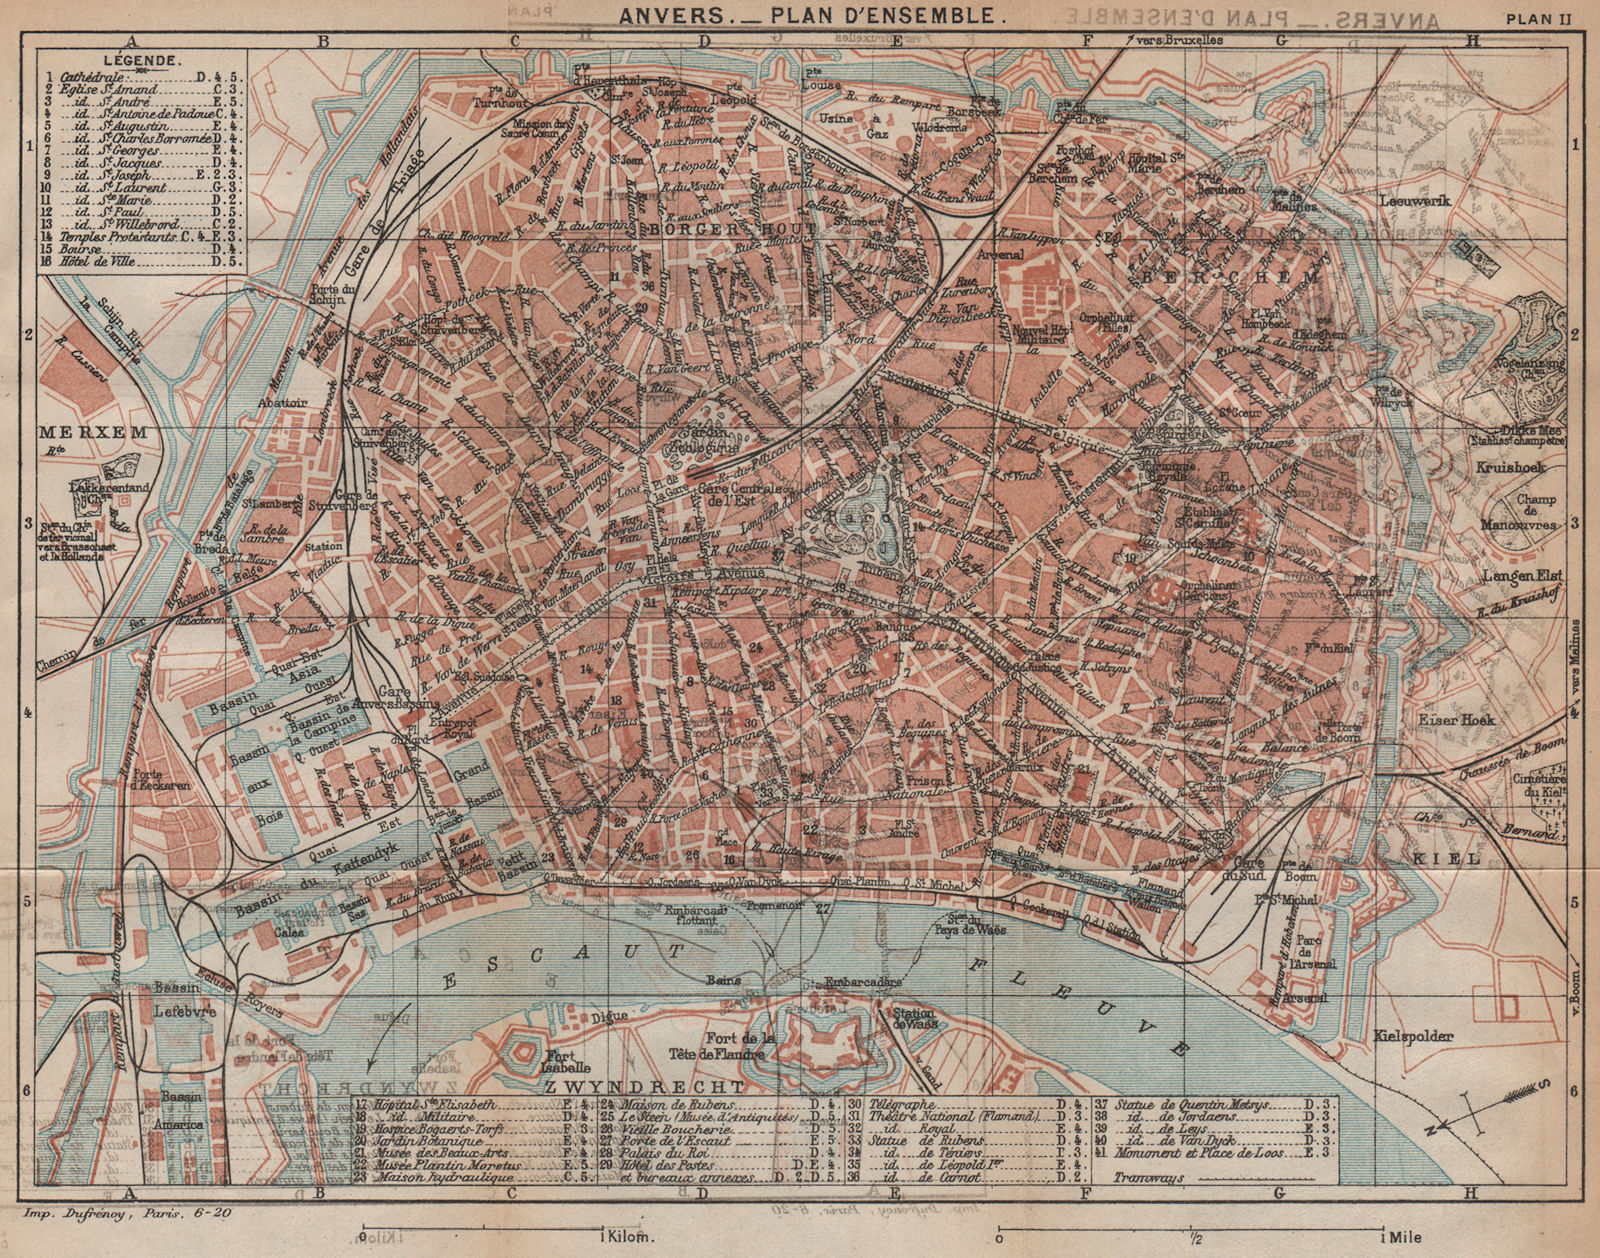 ANTWERPEN-PLAN D'ENSEMBLE. Vintage town city map plan. Belgium. Anvers 1920